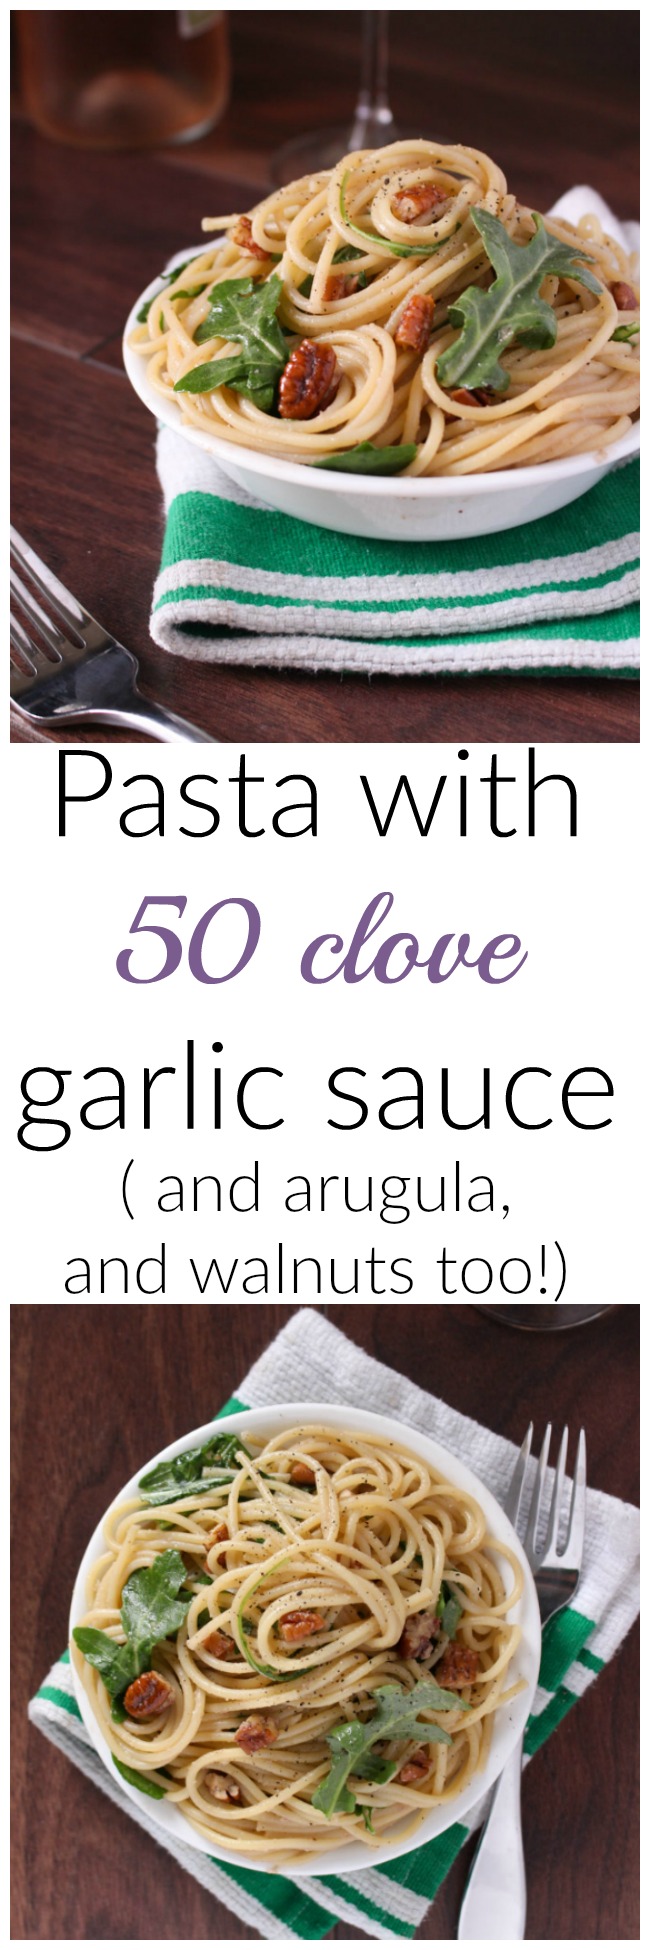 Pasta with Garlic Sauce, Arugula and Walnuts